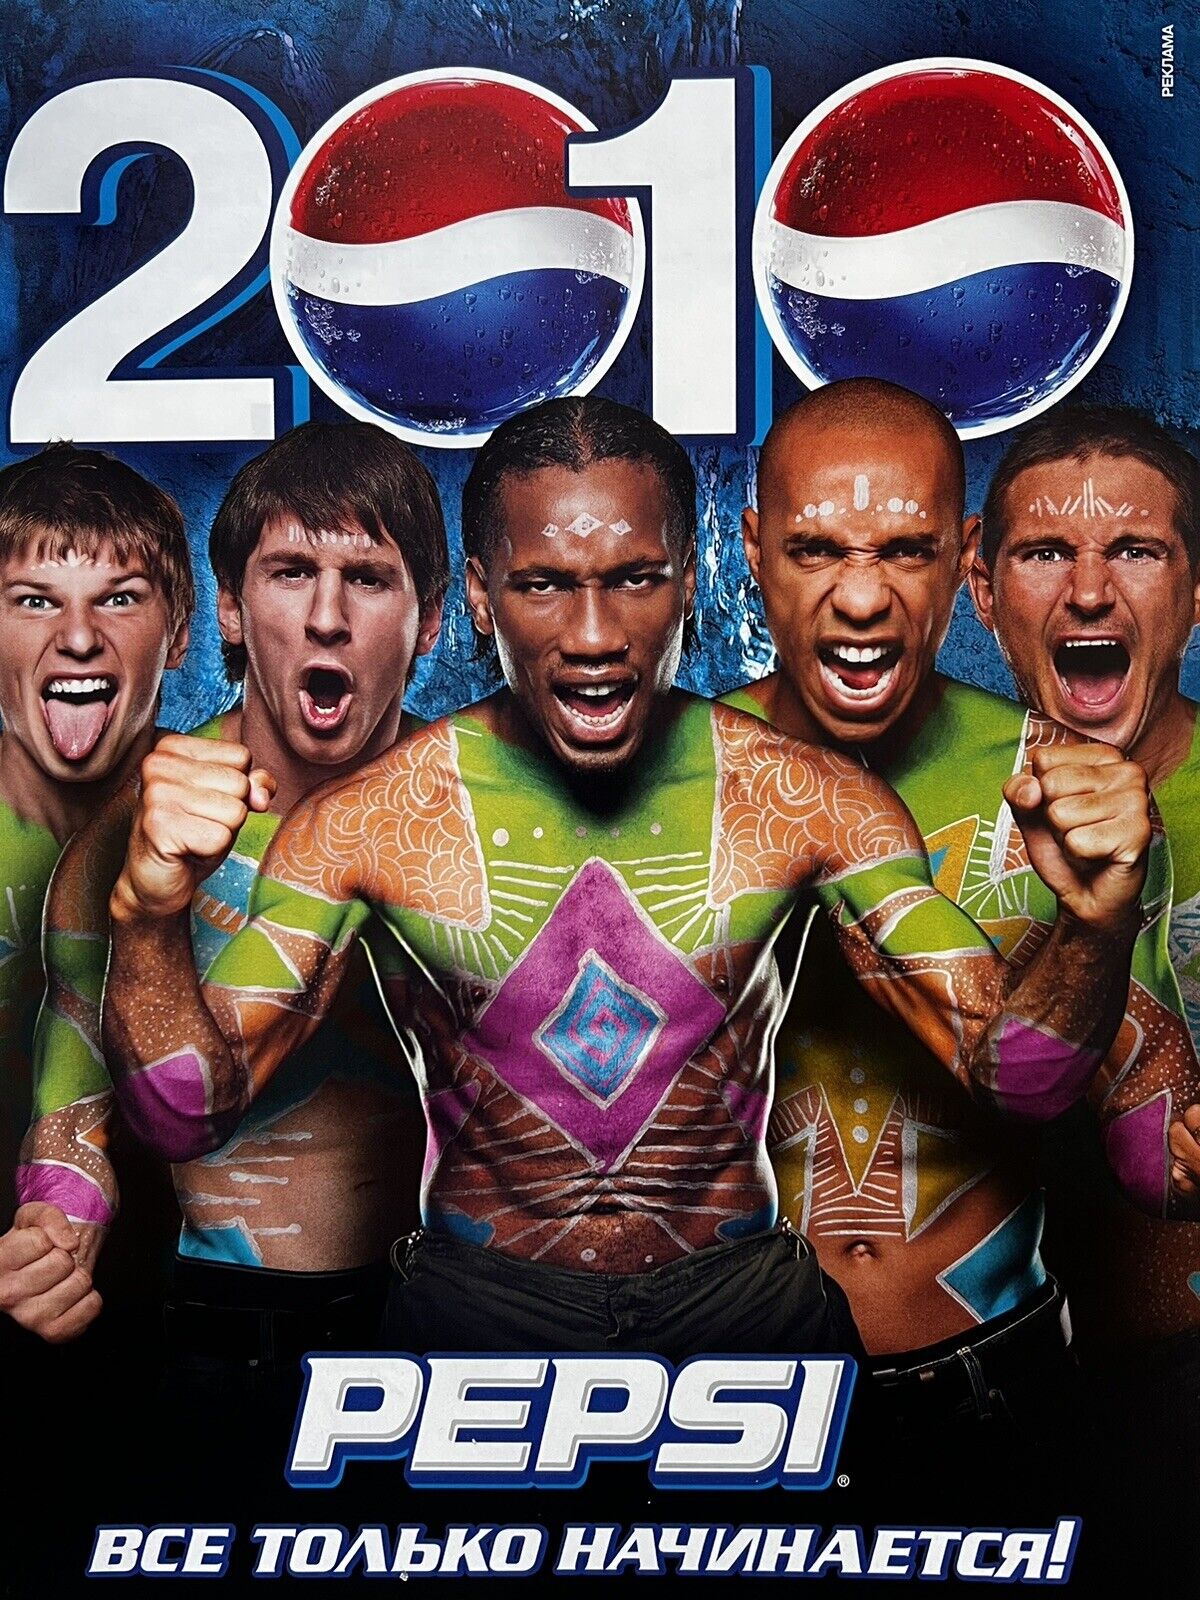 2010 Didier Drogba Soccer Player - Pepsi Russian Poster/Print Ad 22x28cm MAX02